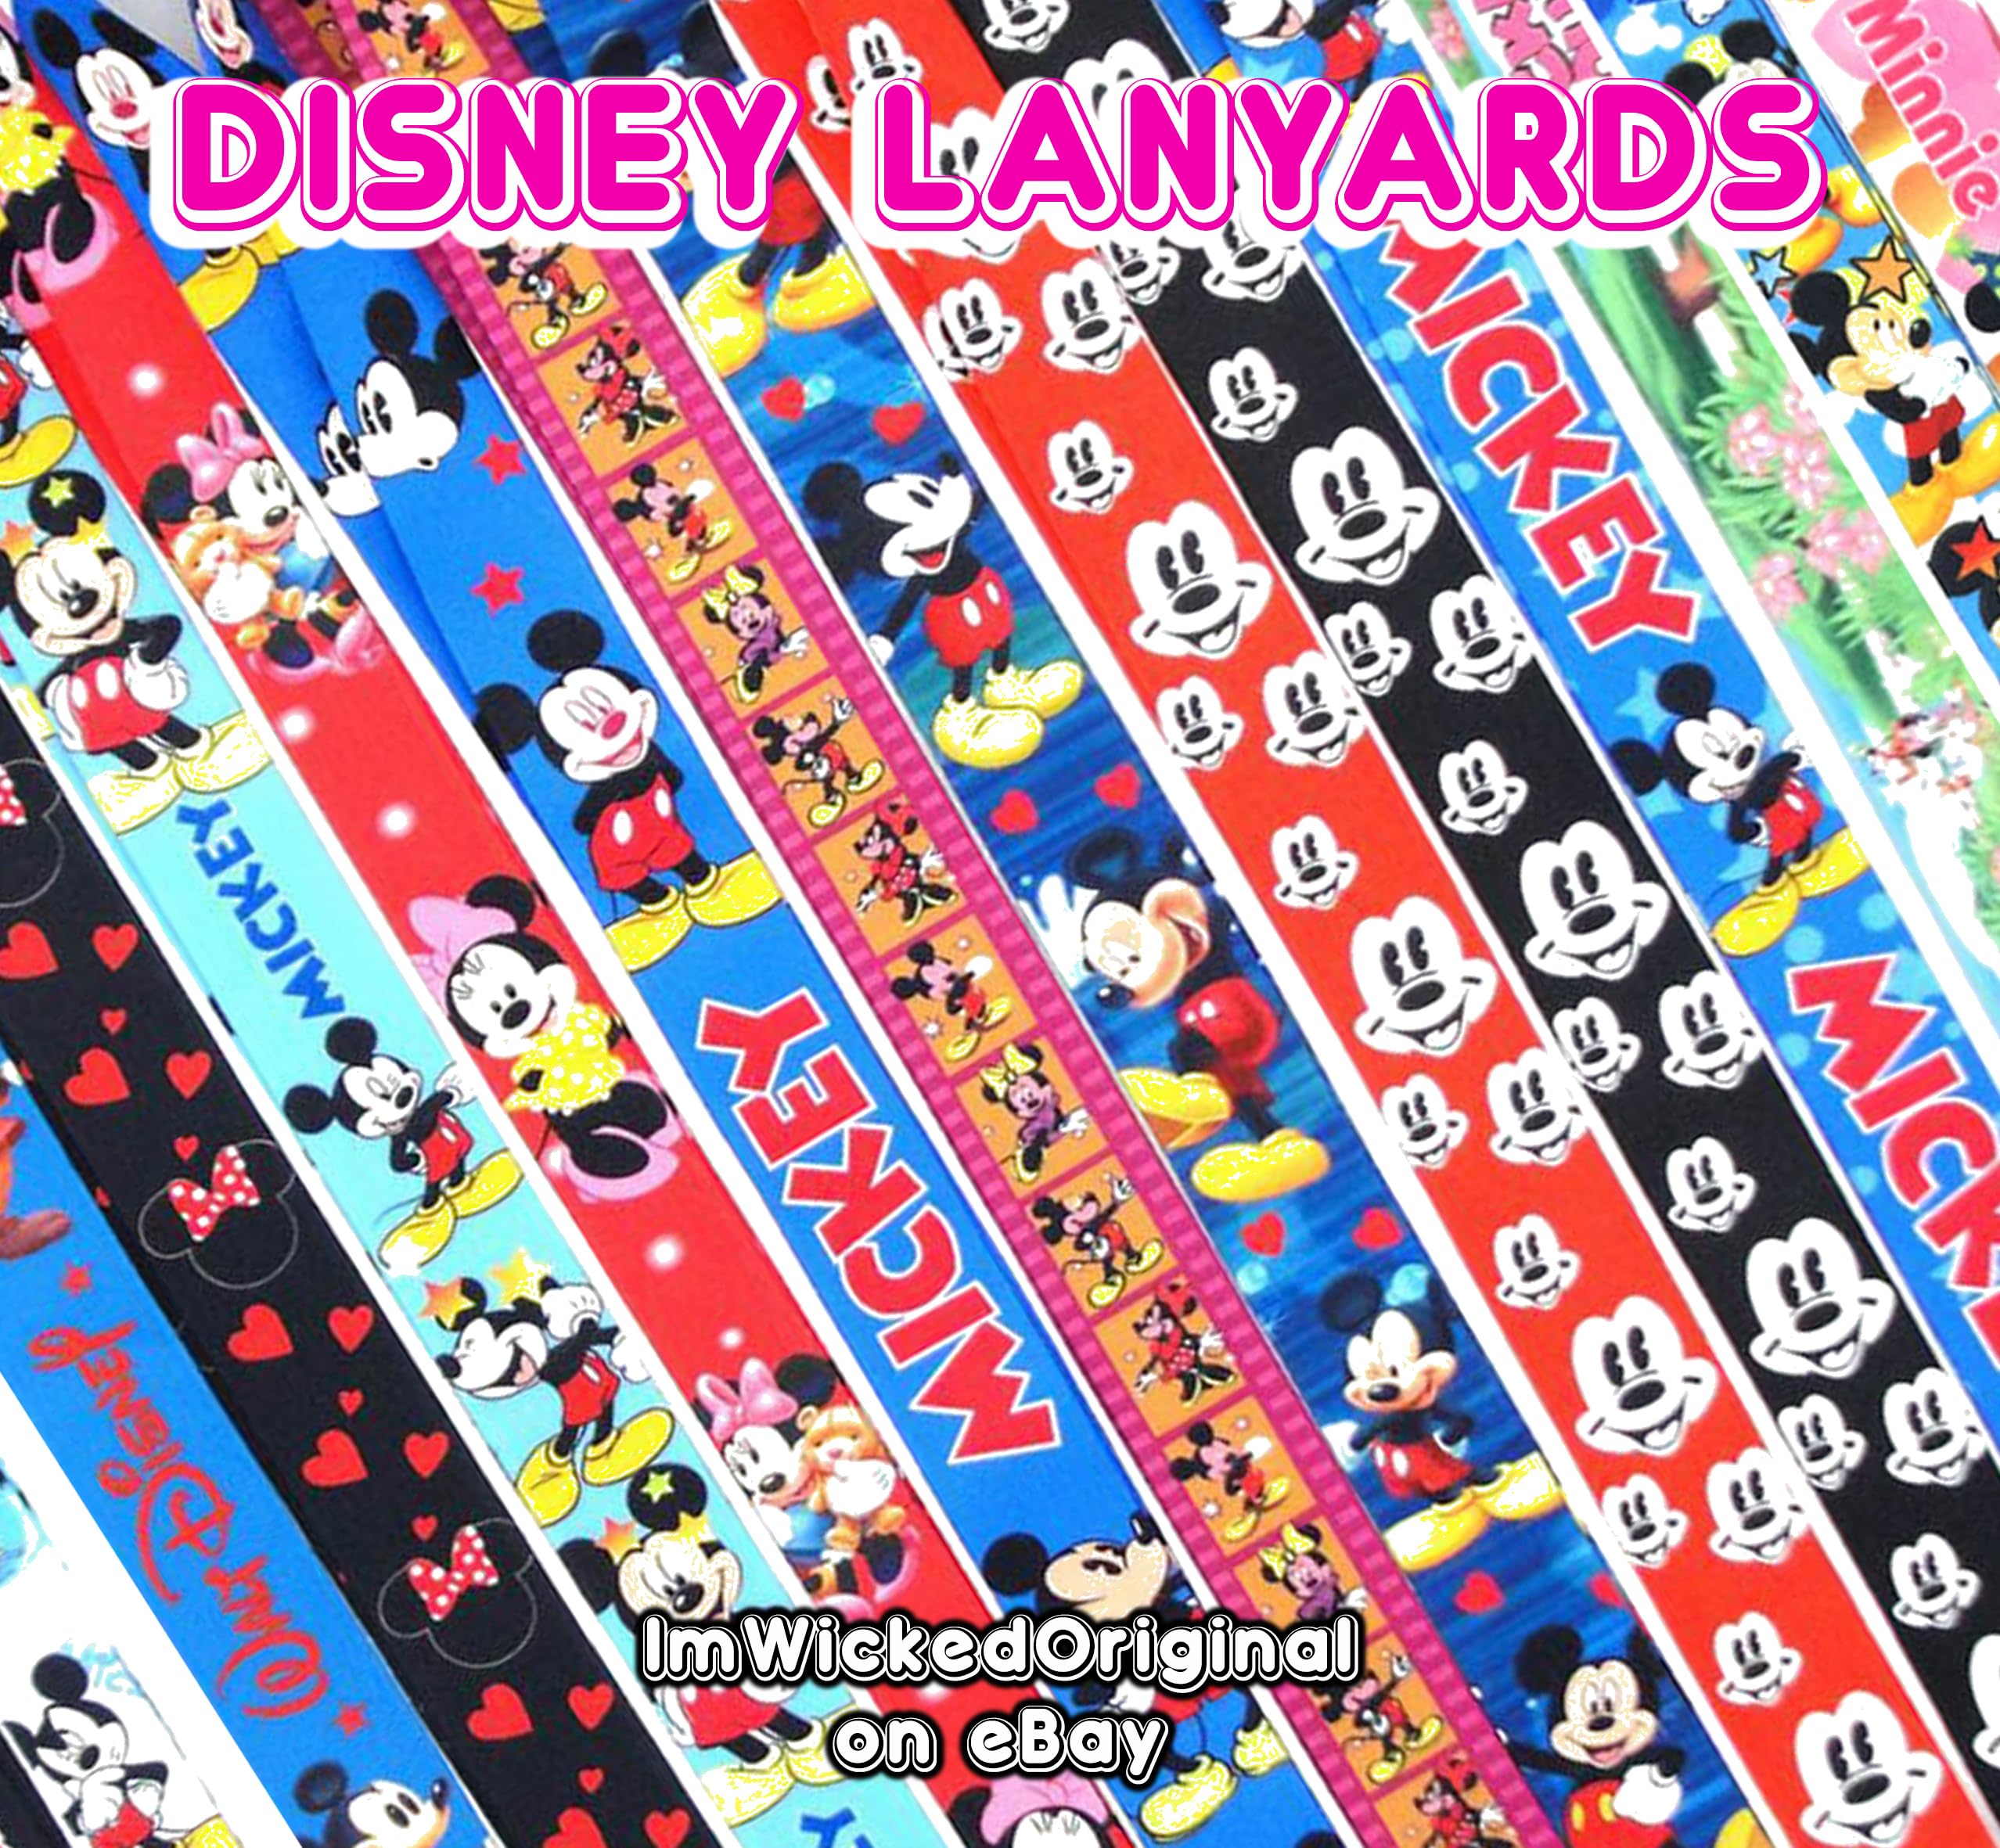 Disney Trading Pin Lot Mixed Pins with Disney Lanyard - Tradable Metal Set Mickey Head Backing - Disney Pins Collector- No Doubles - Assorted Pin Lot